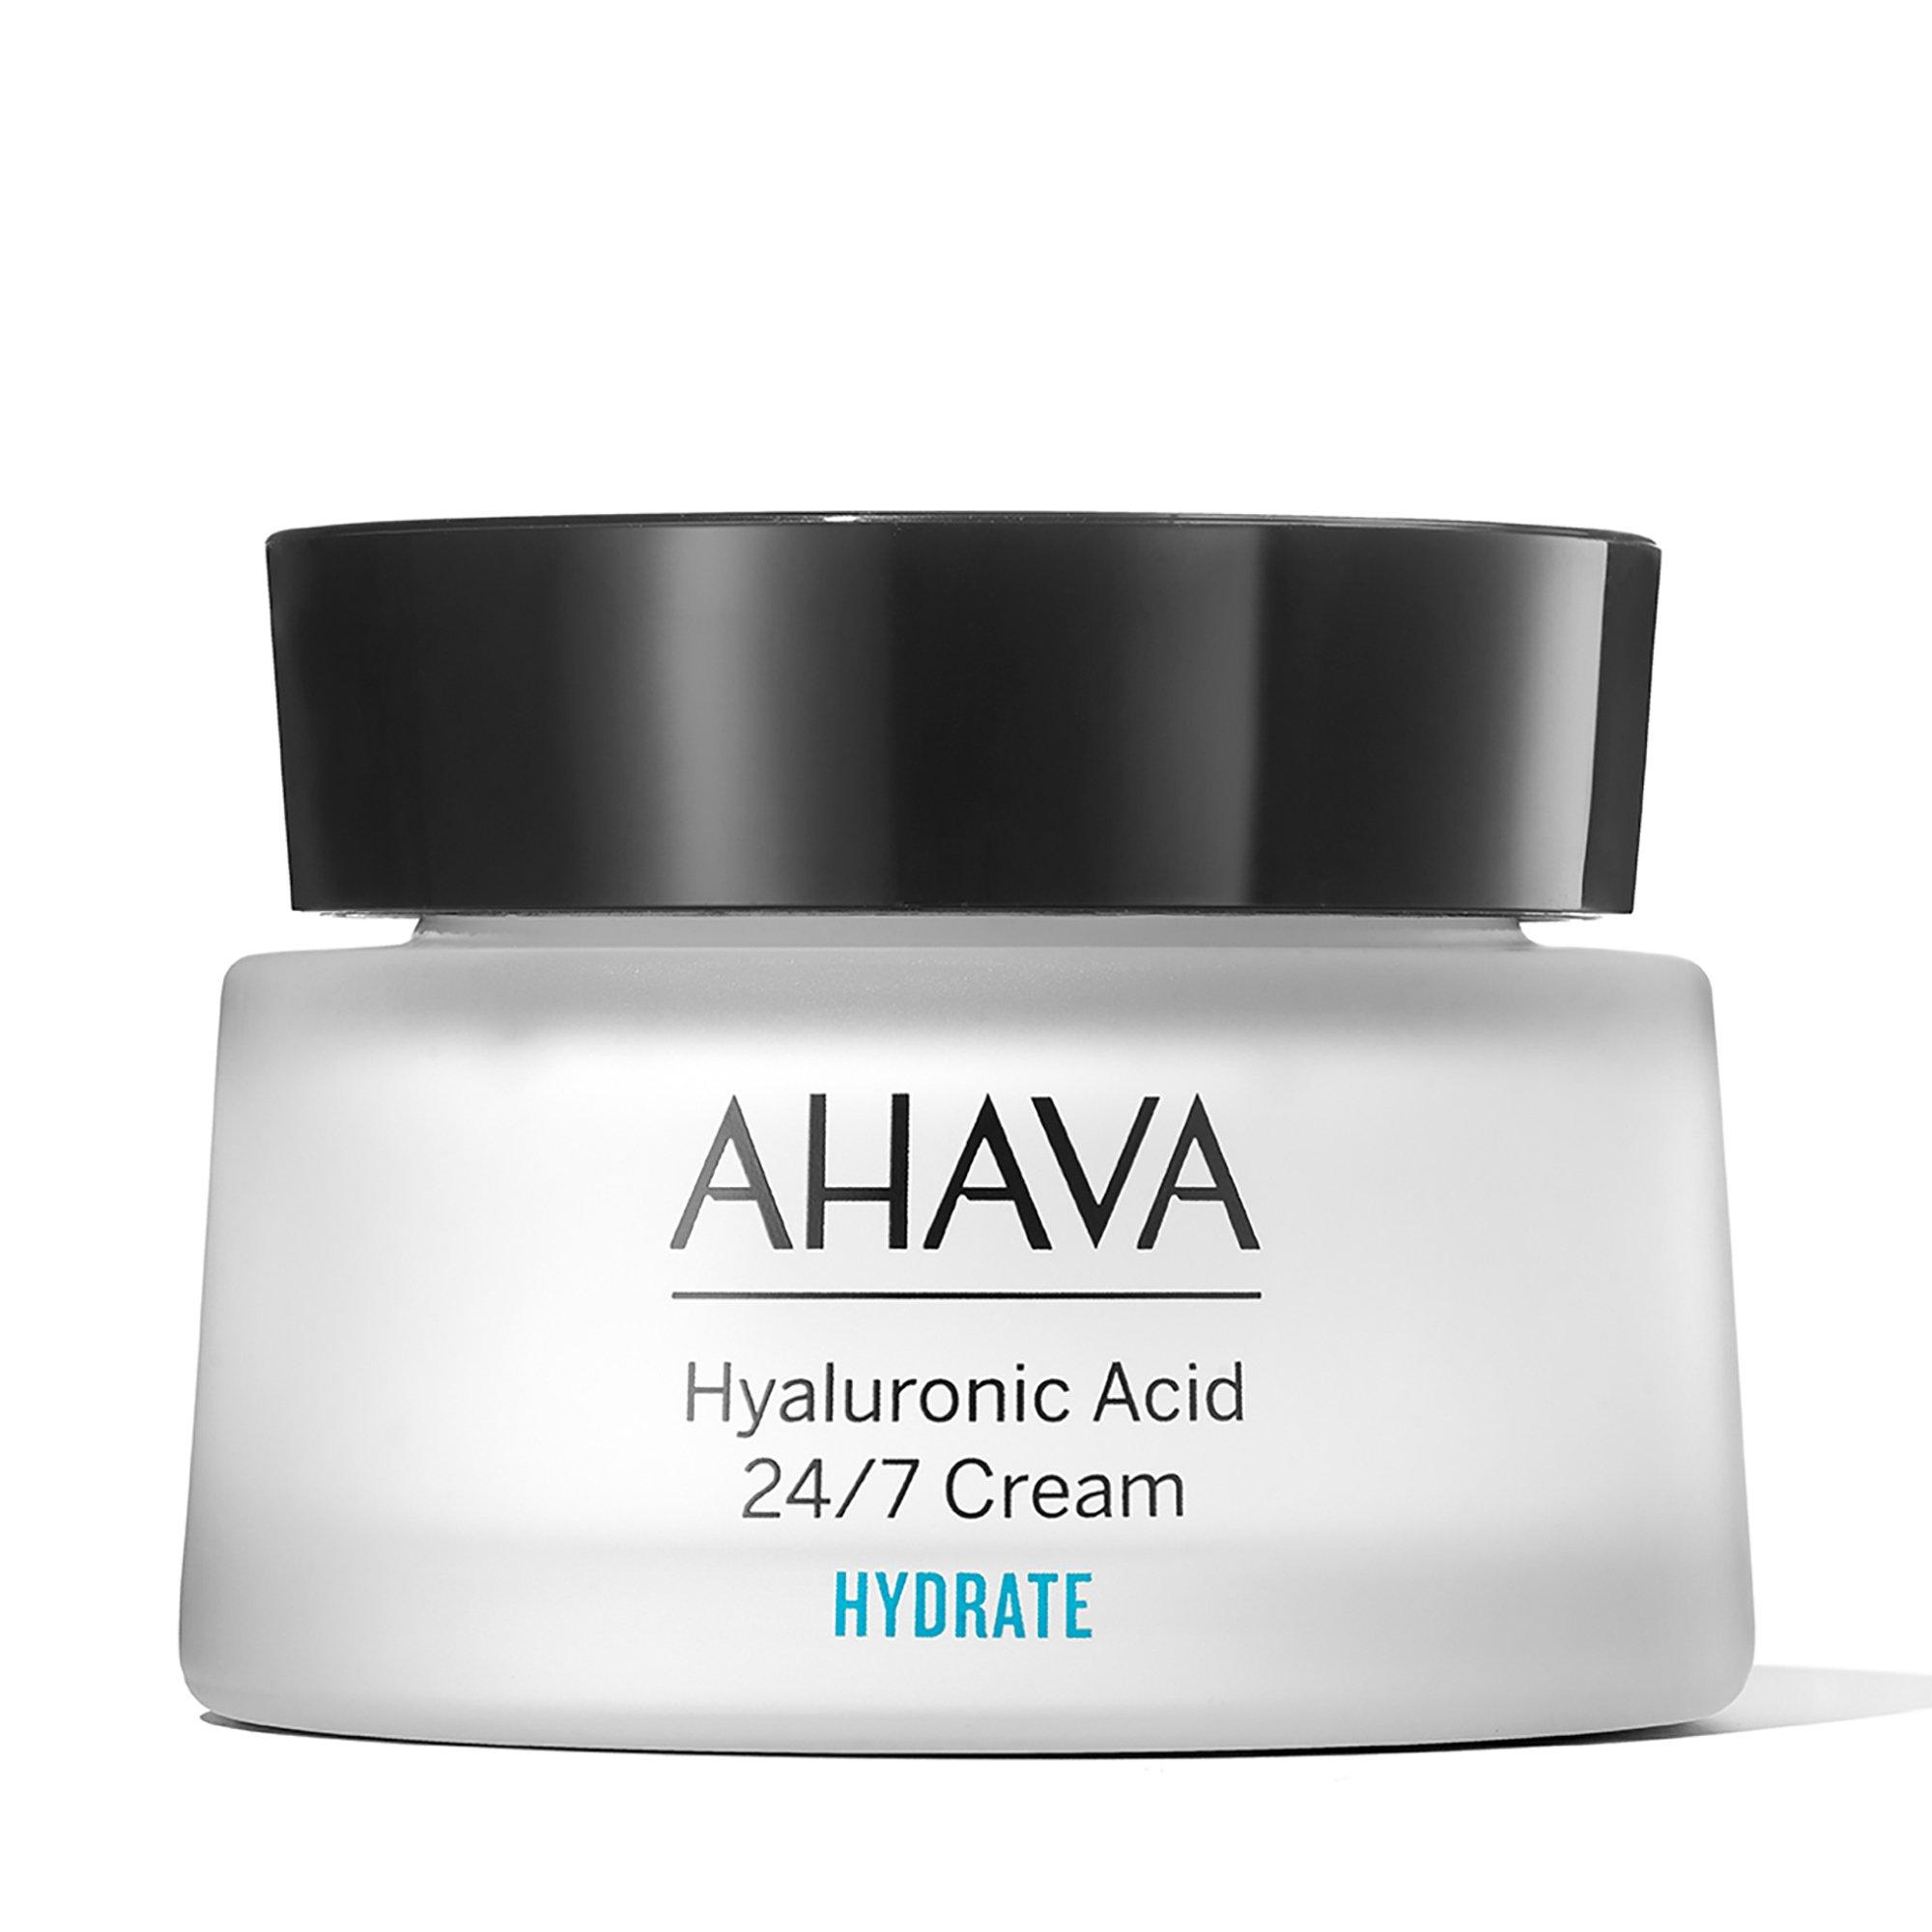 Image of AHAVA Hyaluronic Acid 24/7 Cream - 50ml